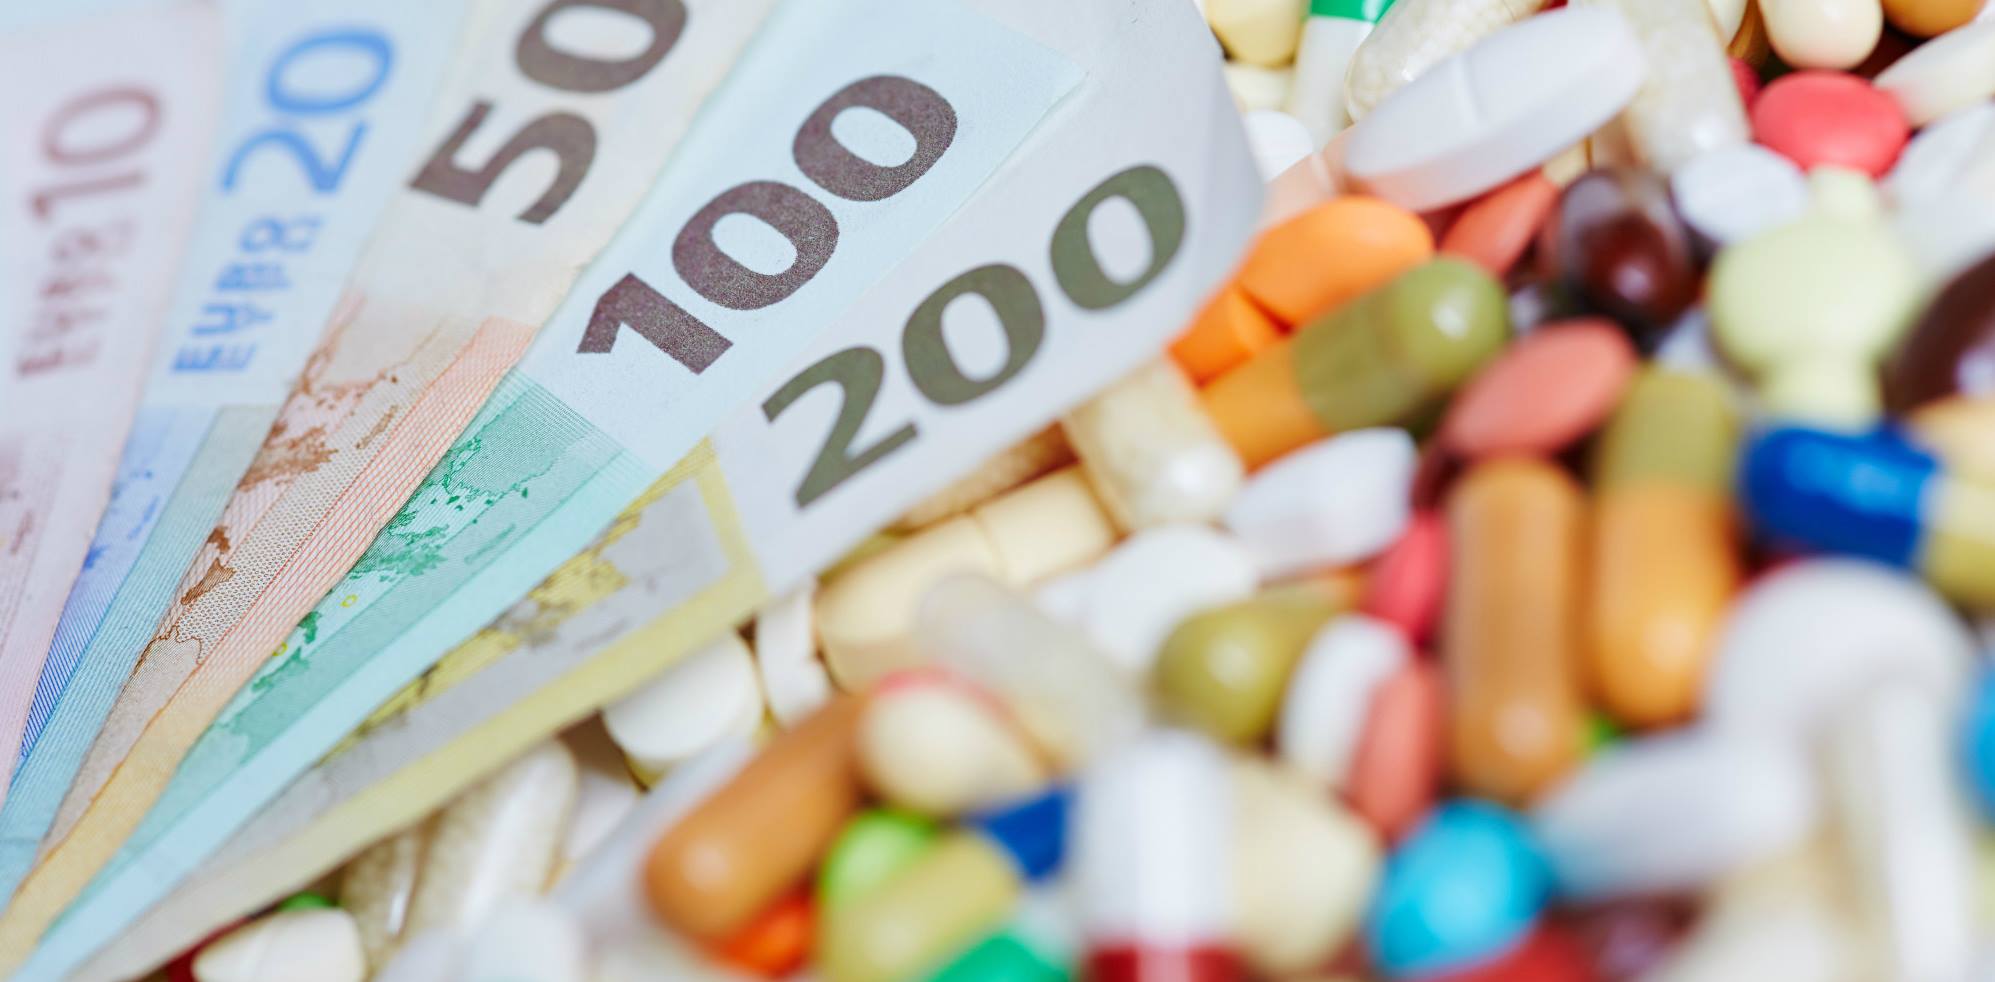 medikamety новости лекарства, рост цен, Турция, Фармацевтический рынок